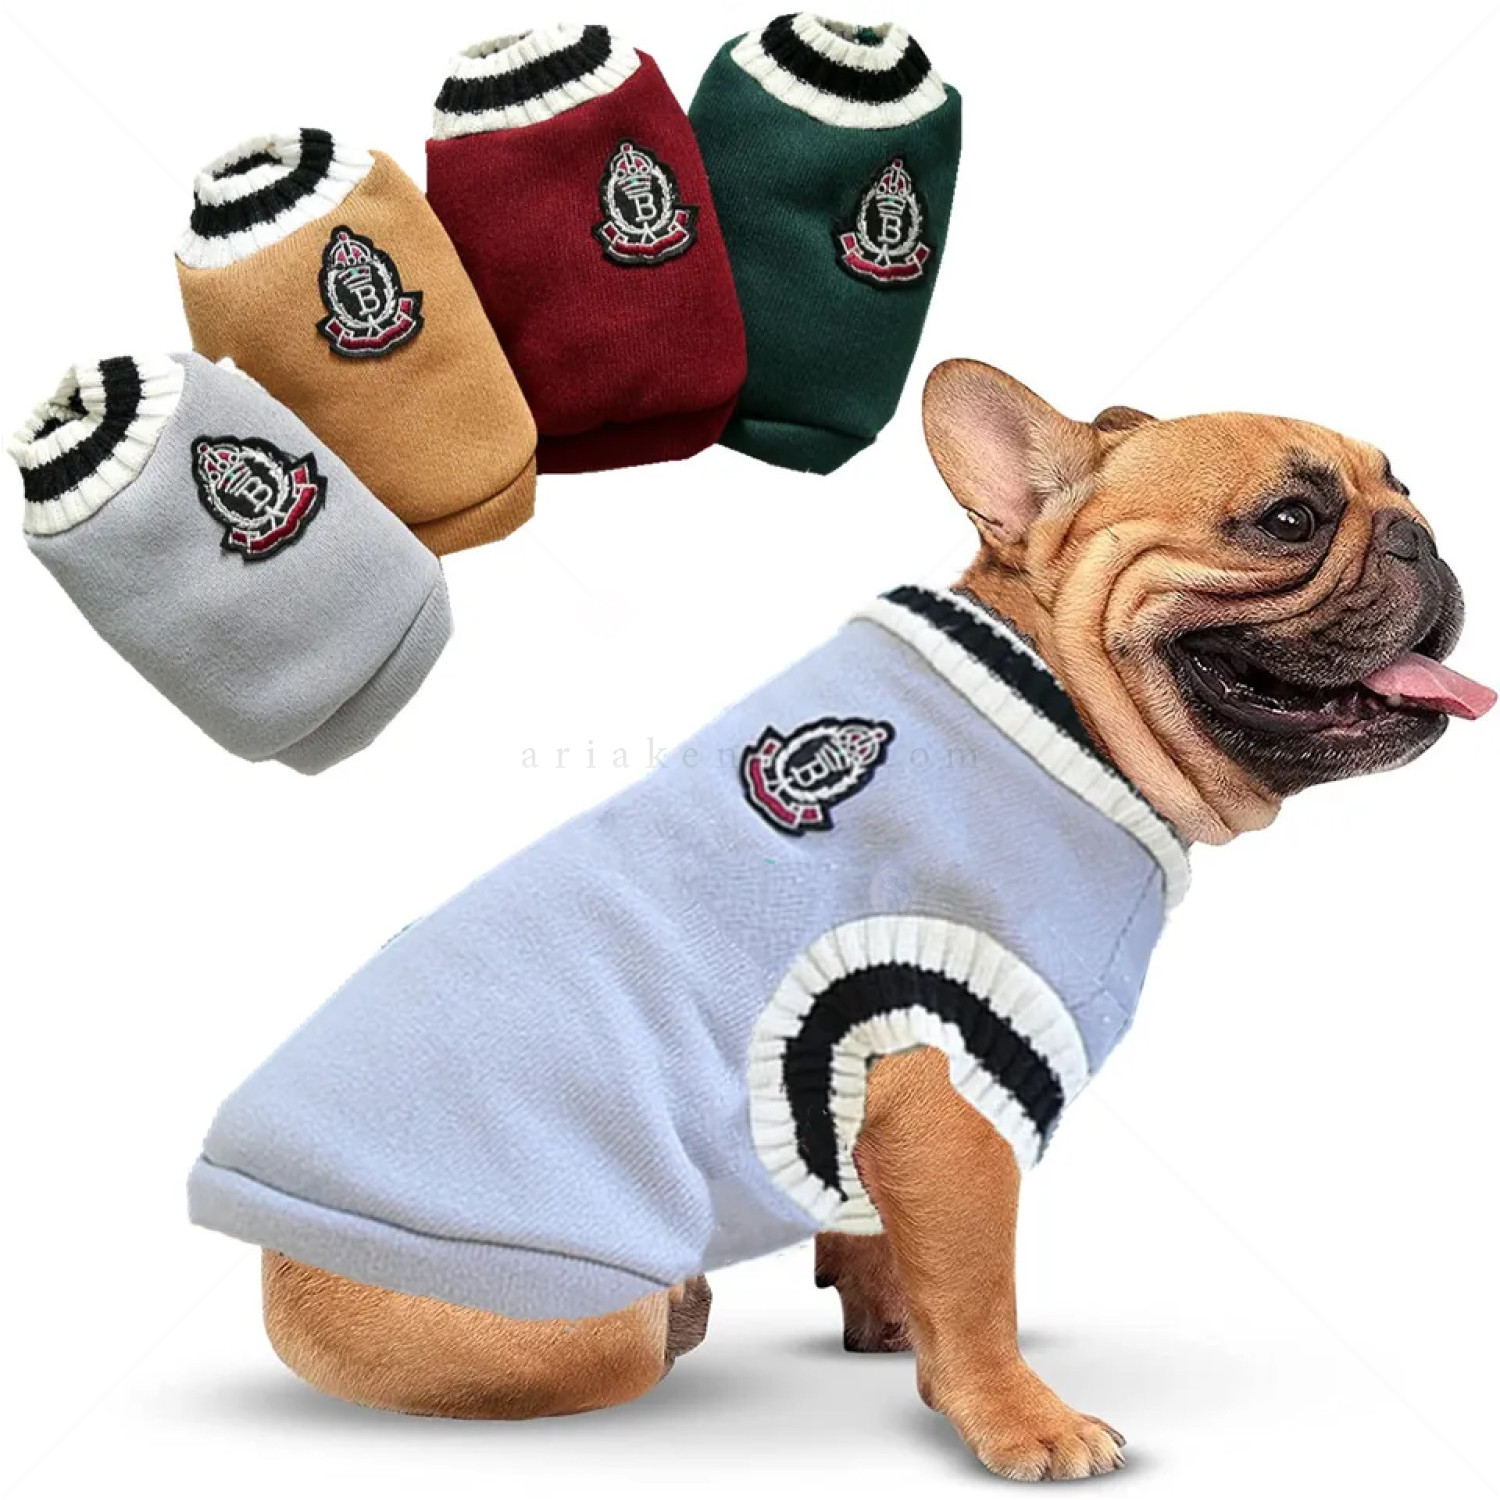 Плетен пуловер с емблема, MINA PET, S, зелен